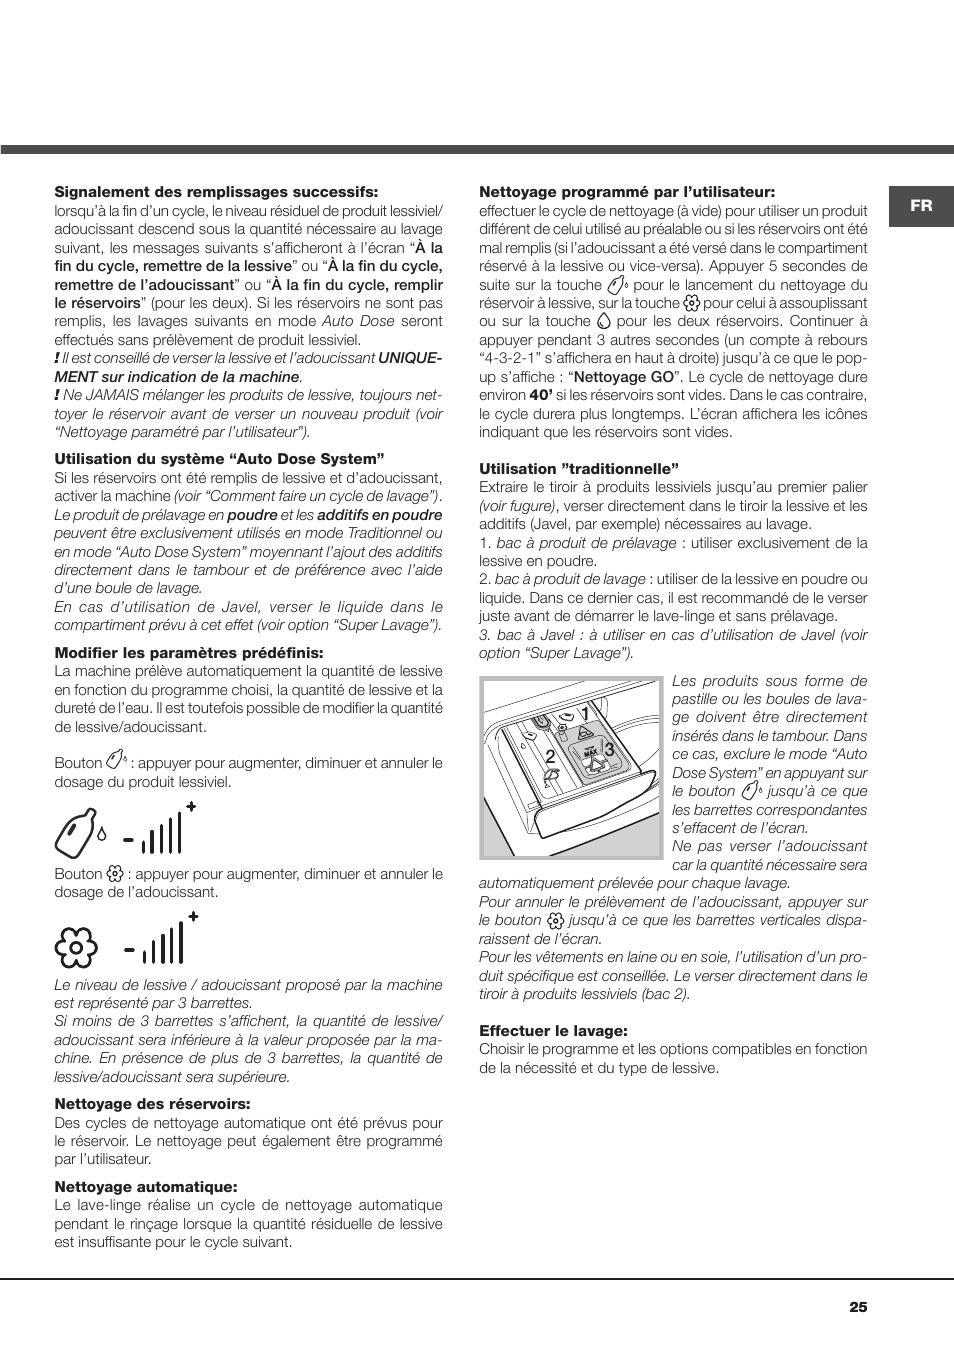 Hotpoint Ariston Aqualtis ADS93D 69 EU-A User Manual | Page 25 / 80